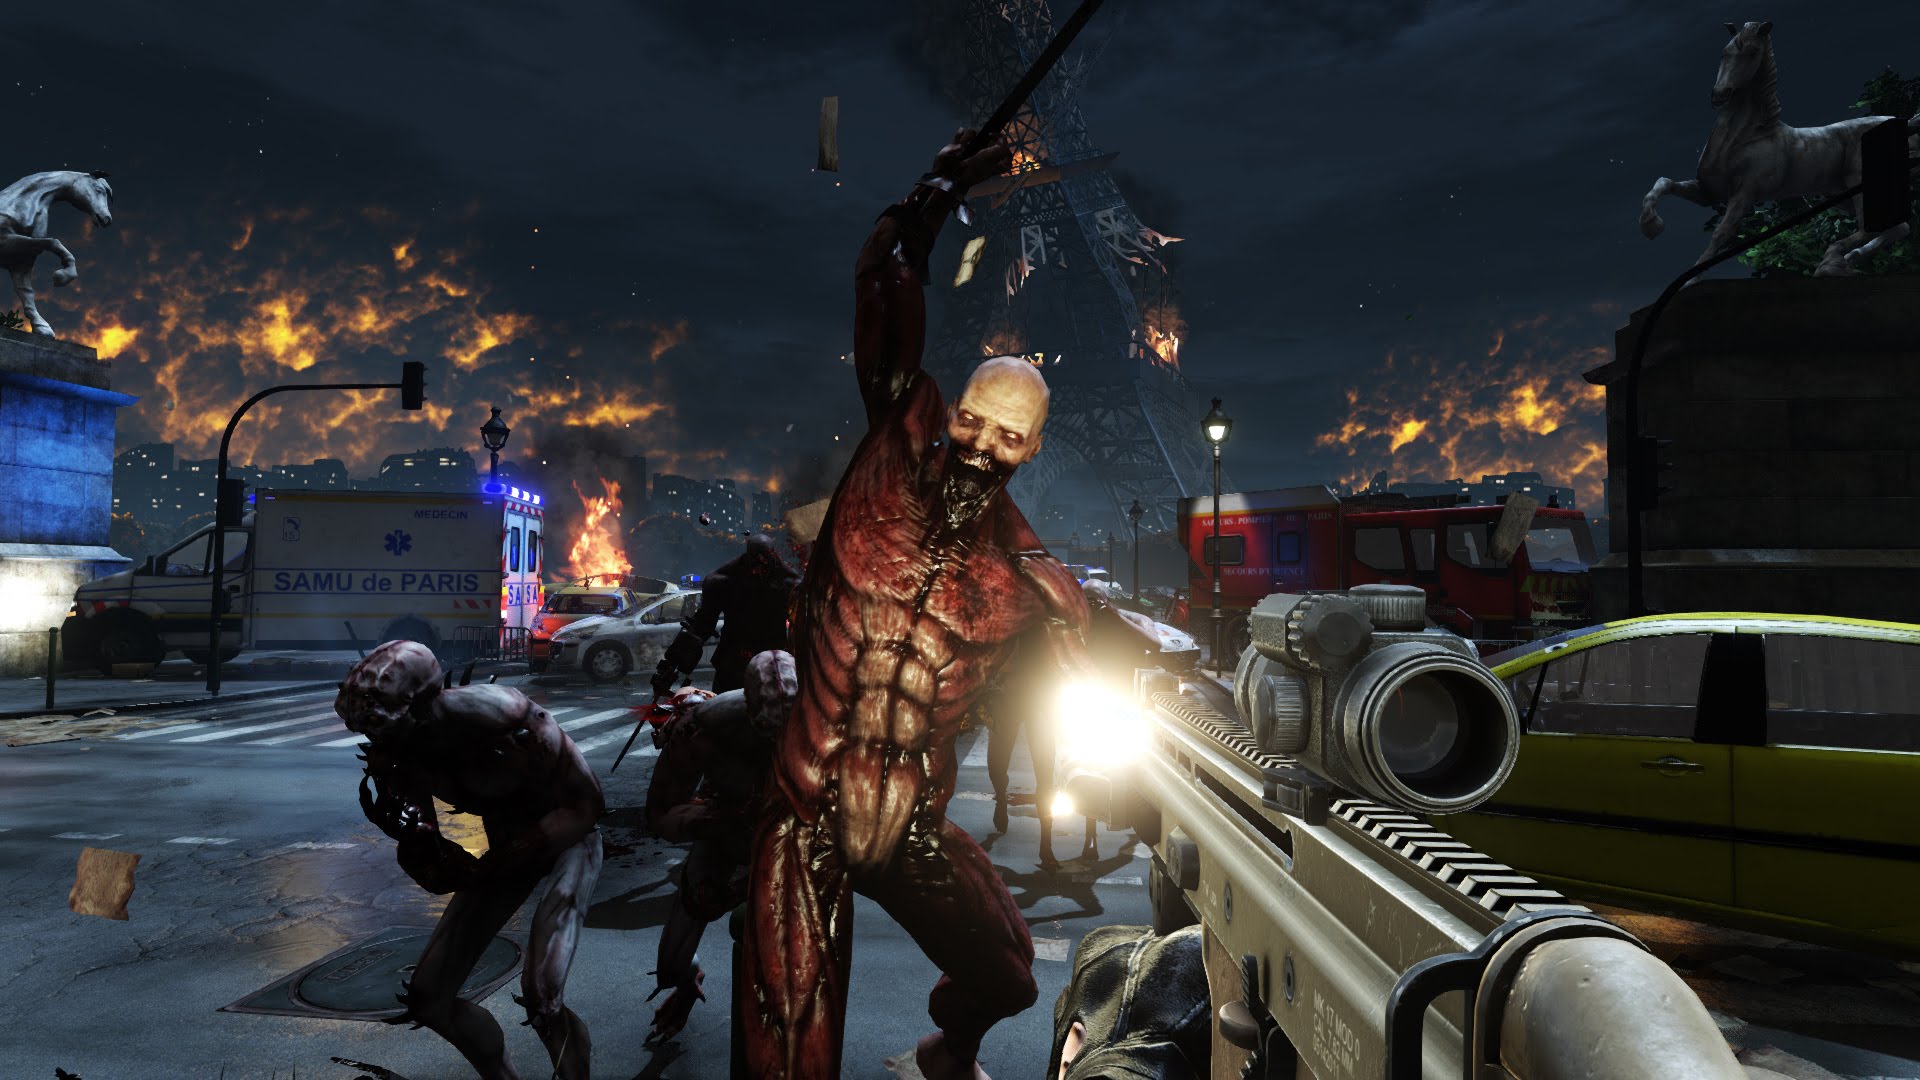 Killing 2 gets new PS4 Pro footage | GodisaGeek.com